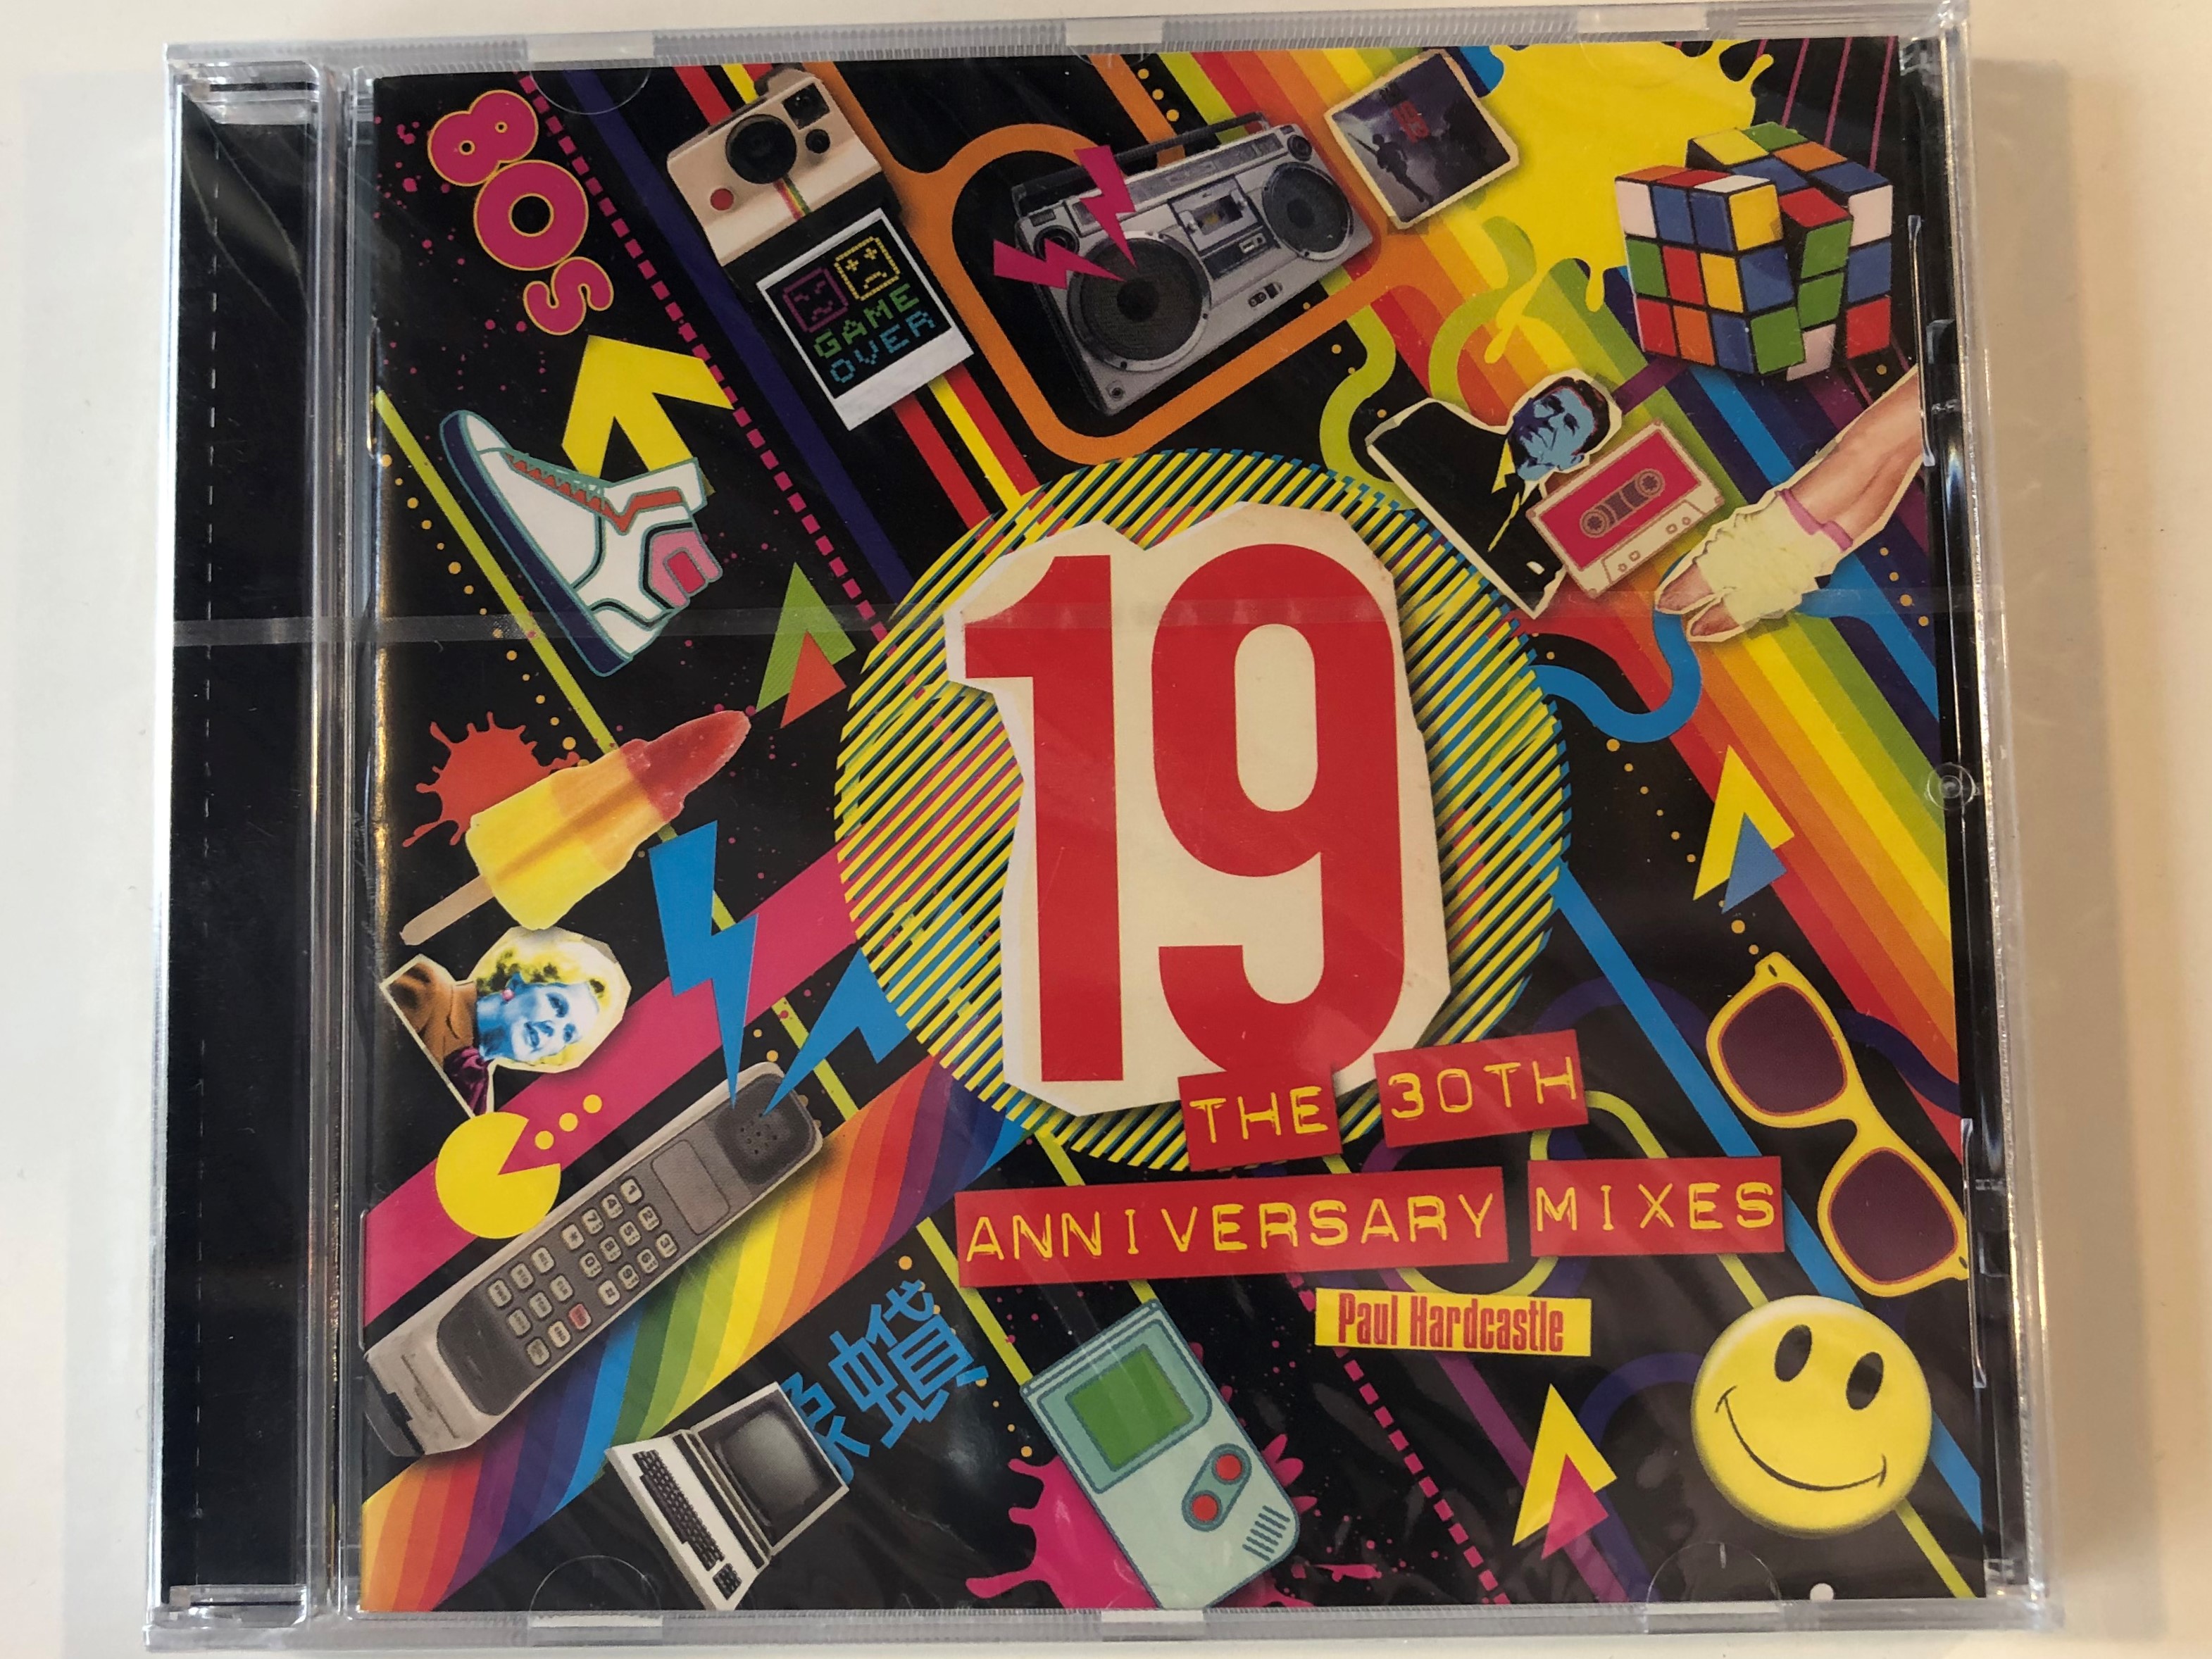 19-the-30th-anniversary-mixes-paul-hardcastle-nua-entertainment-audio-cd-2015-602547296597-1-.jpg